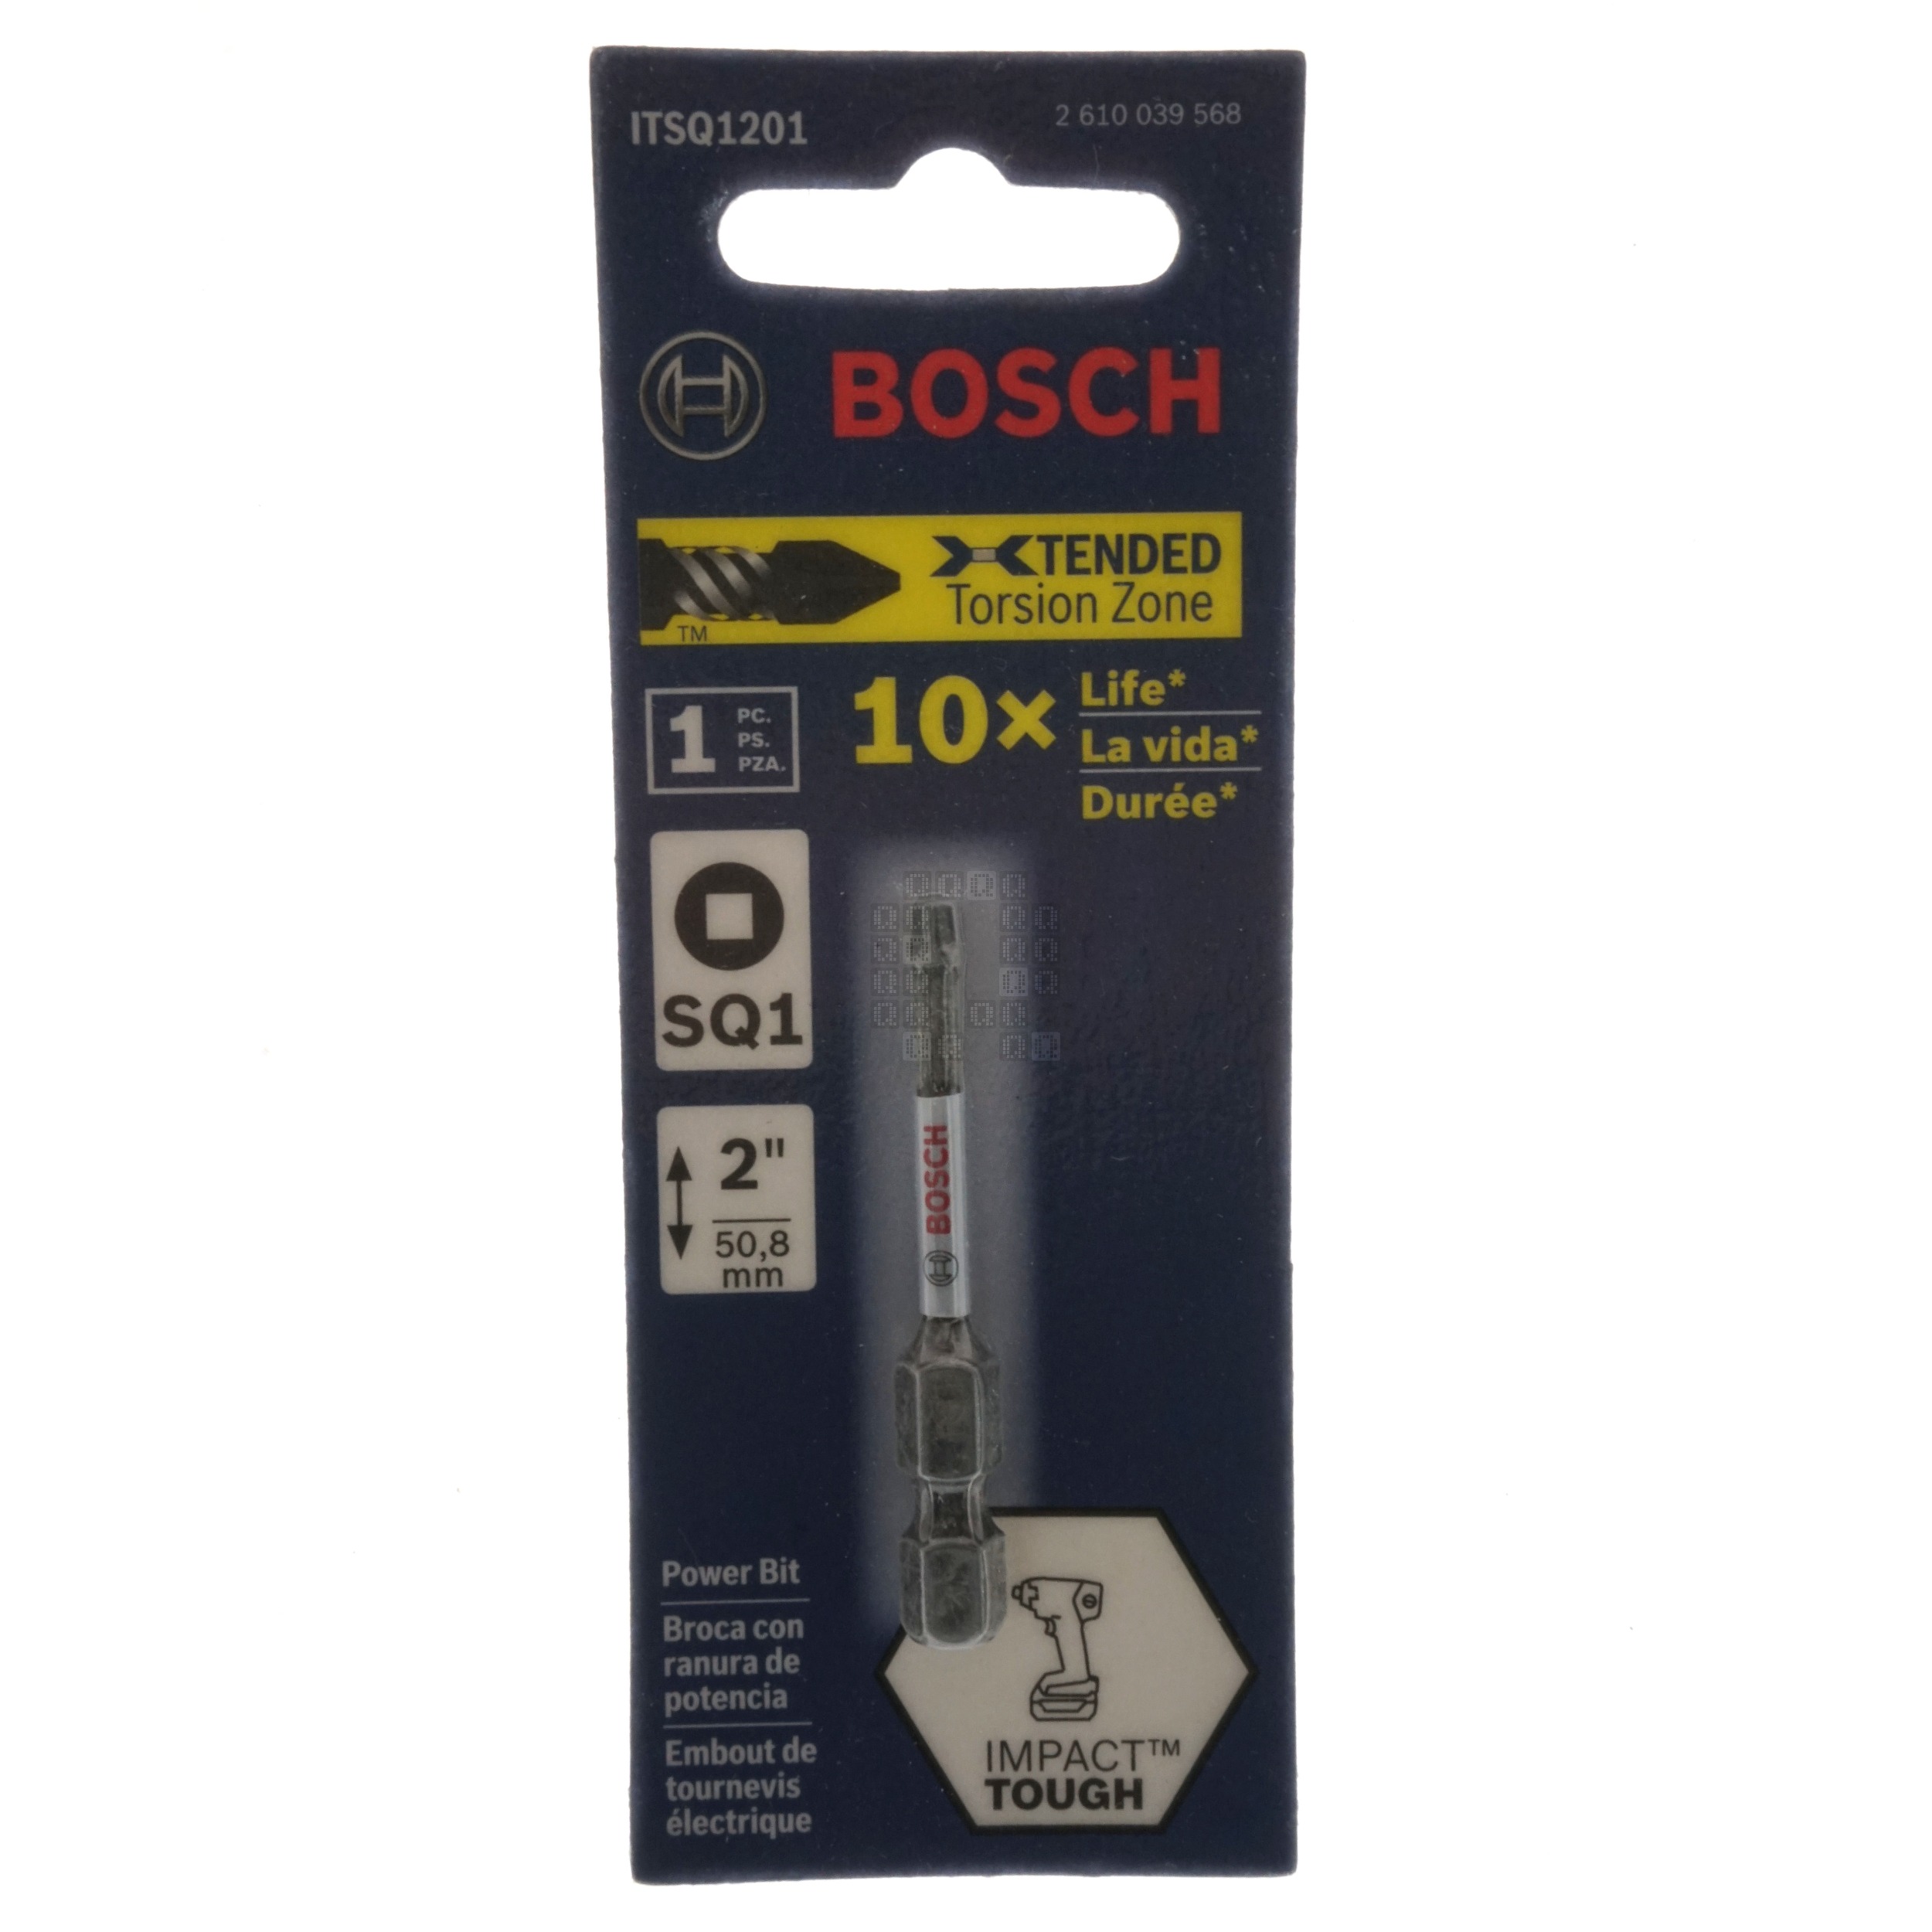 Bosch 2610039568 ITSQ1201 Impact Tough SQ1 #1 Square Recess Power Bit, 2" Length